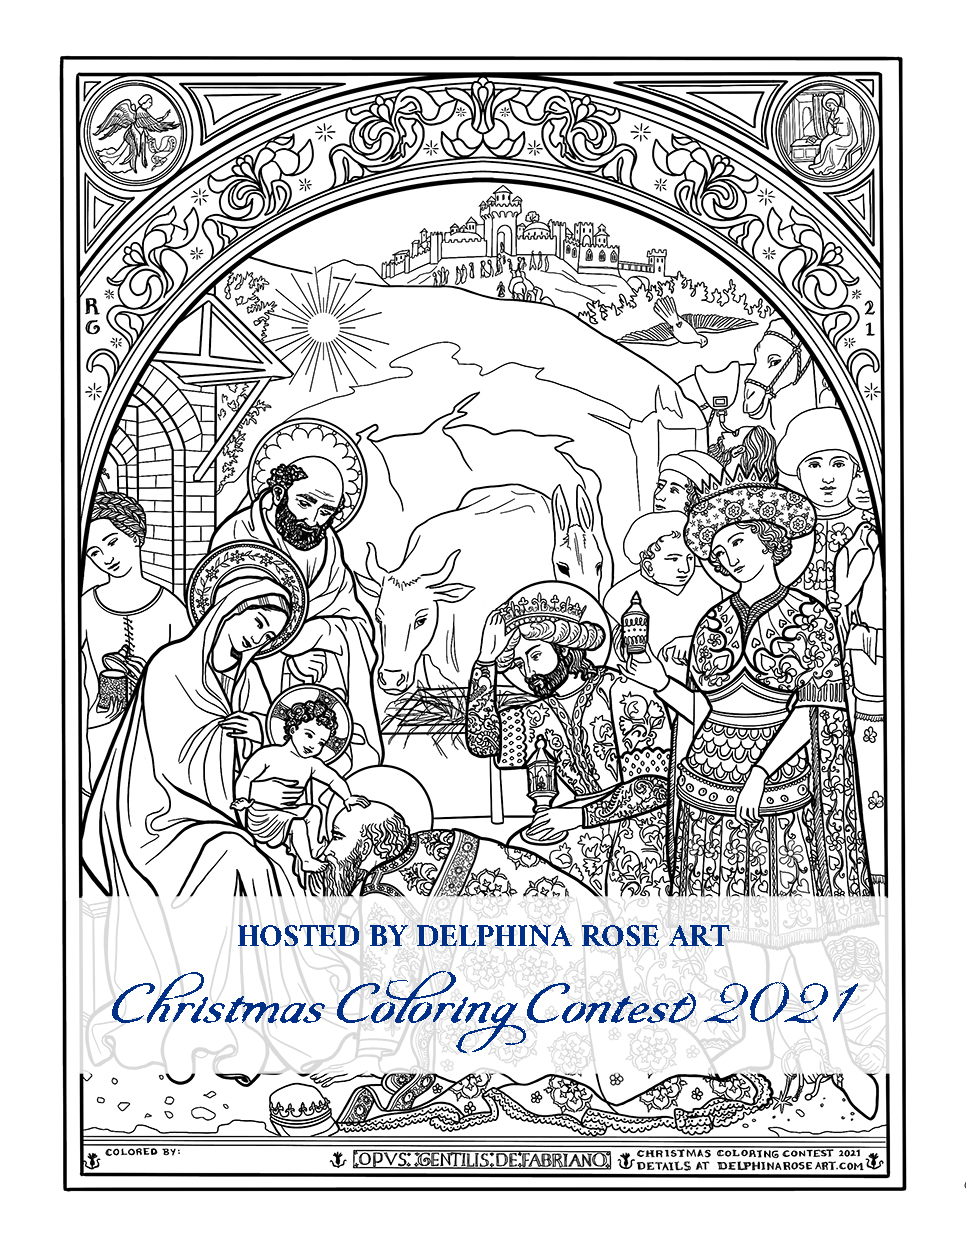 Christmas coloring contest â delphina rose art